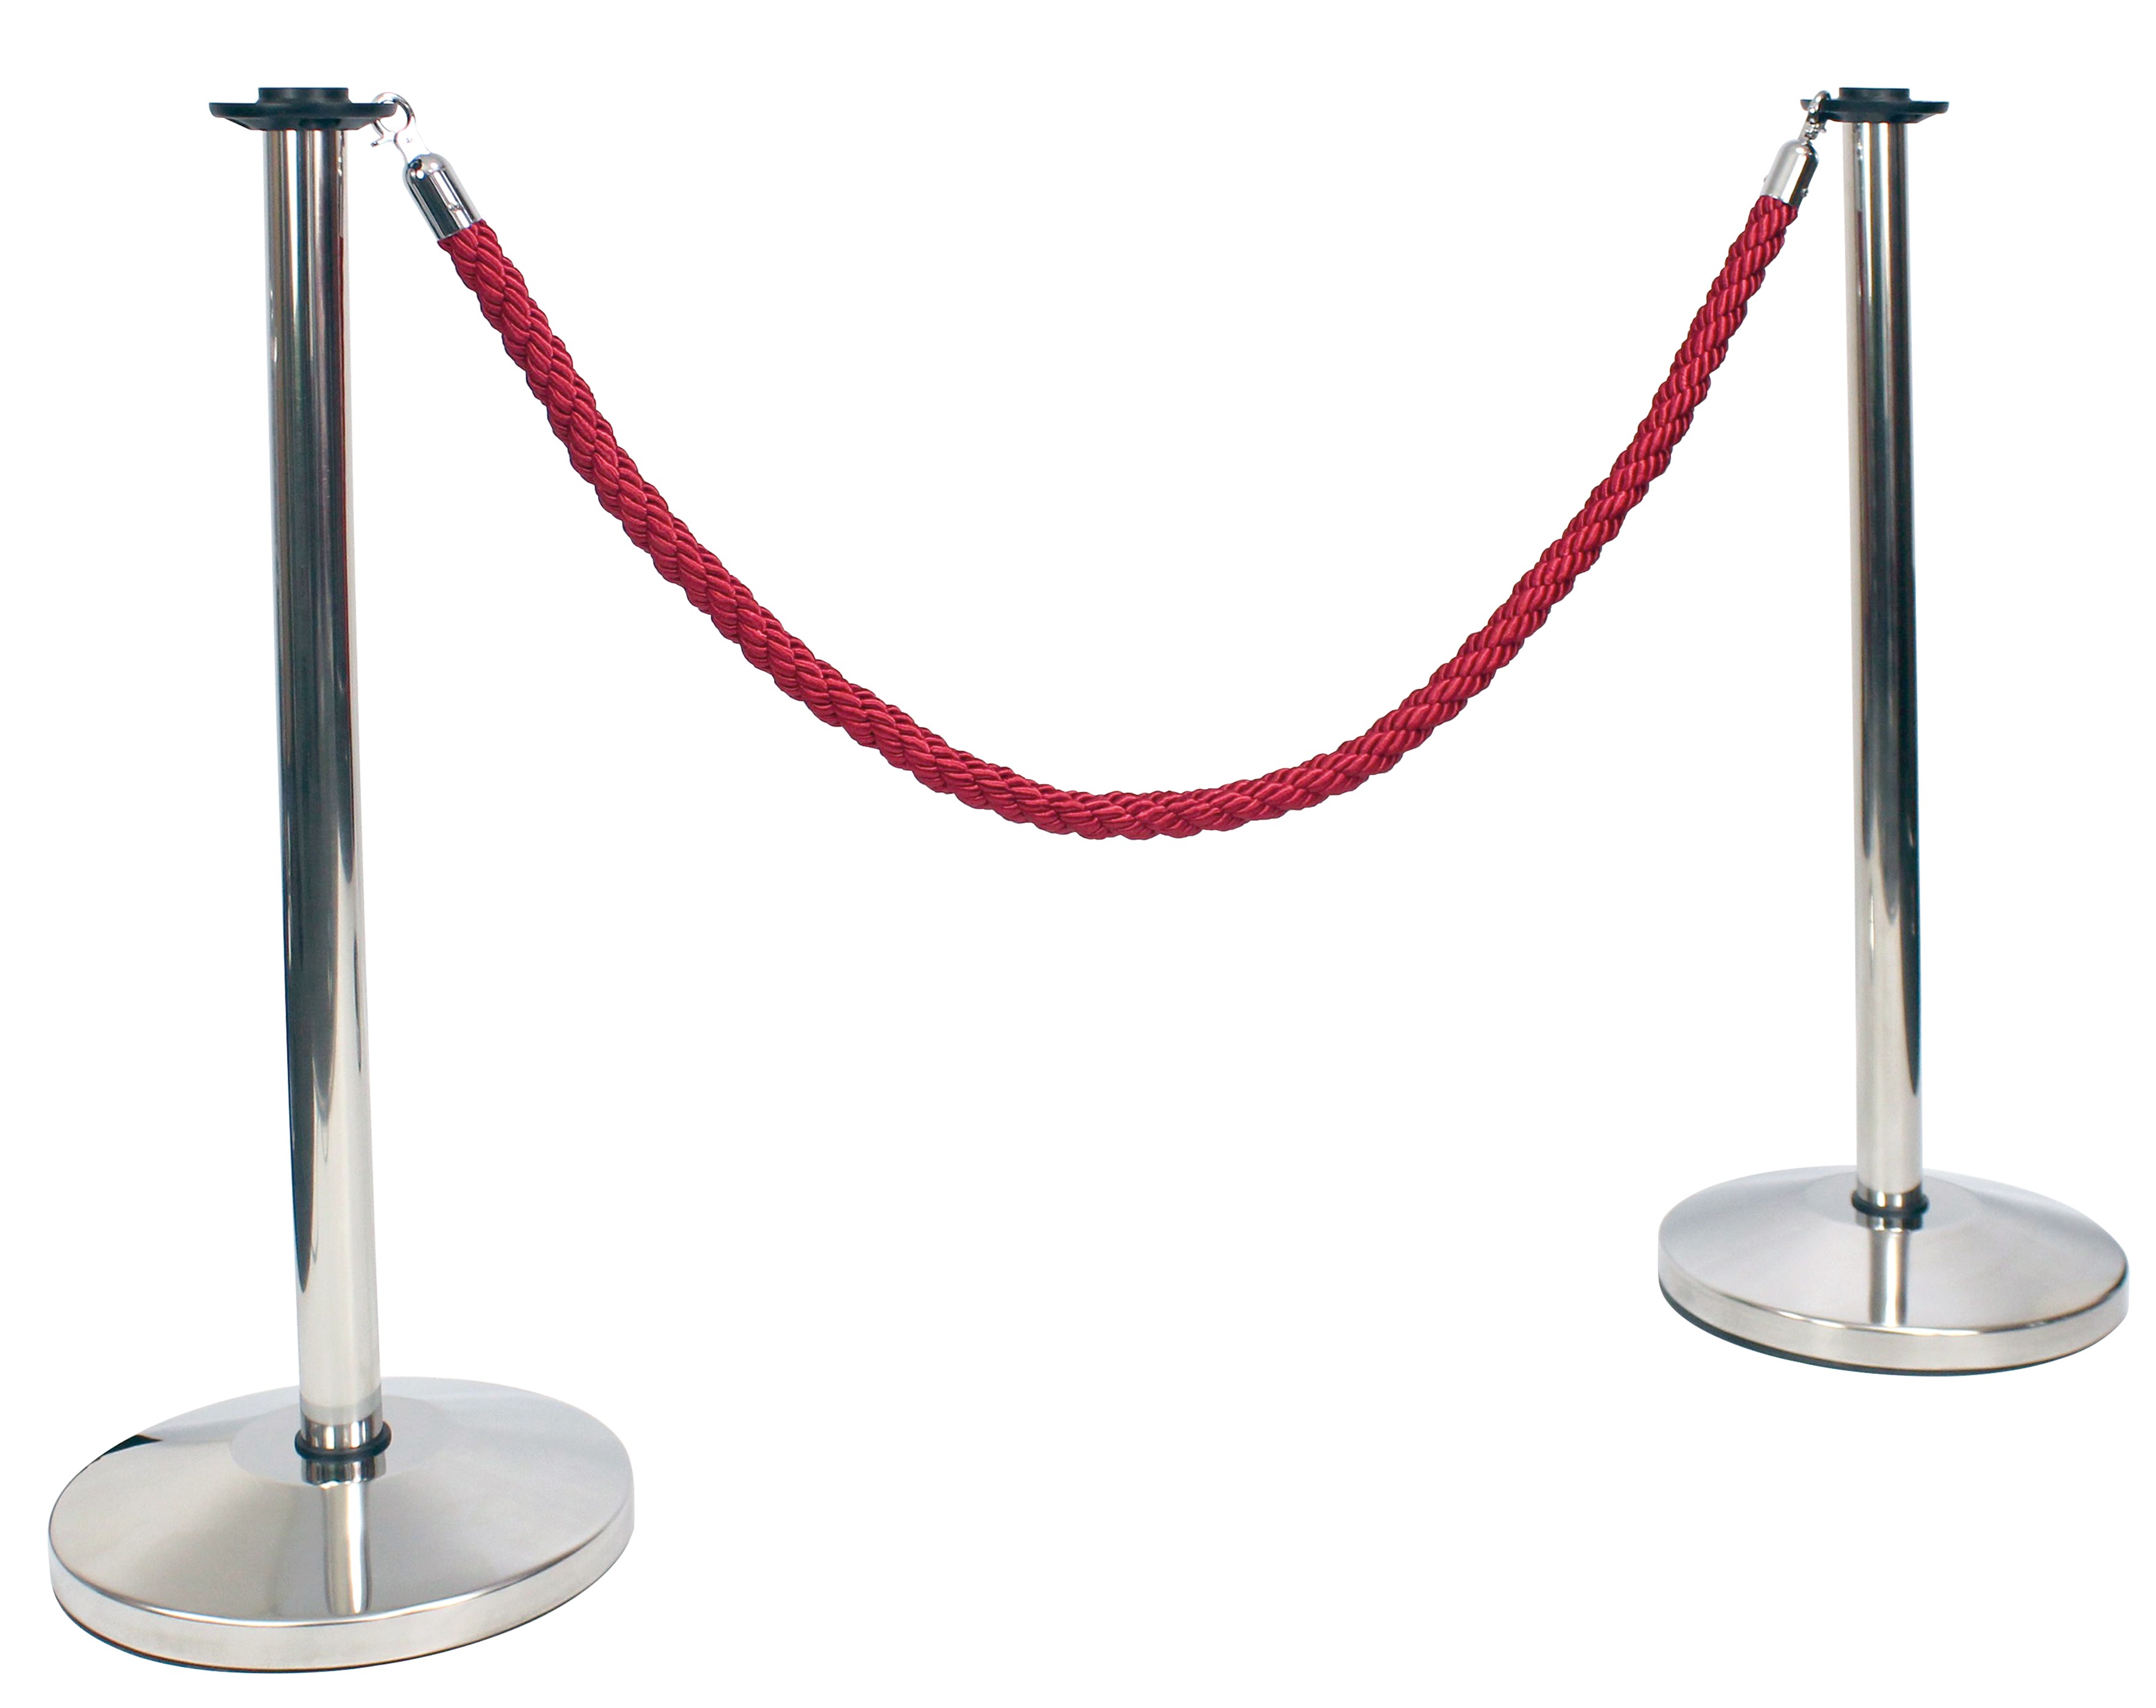 Buy Black Pole & Rope Barrier Online on Scribo Display